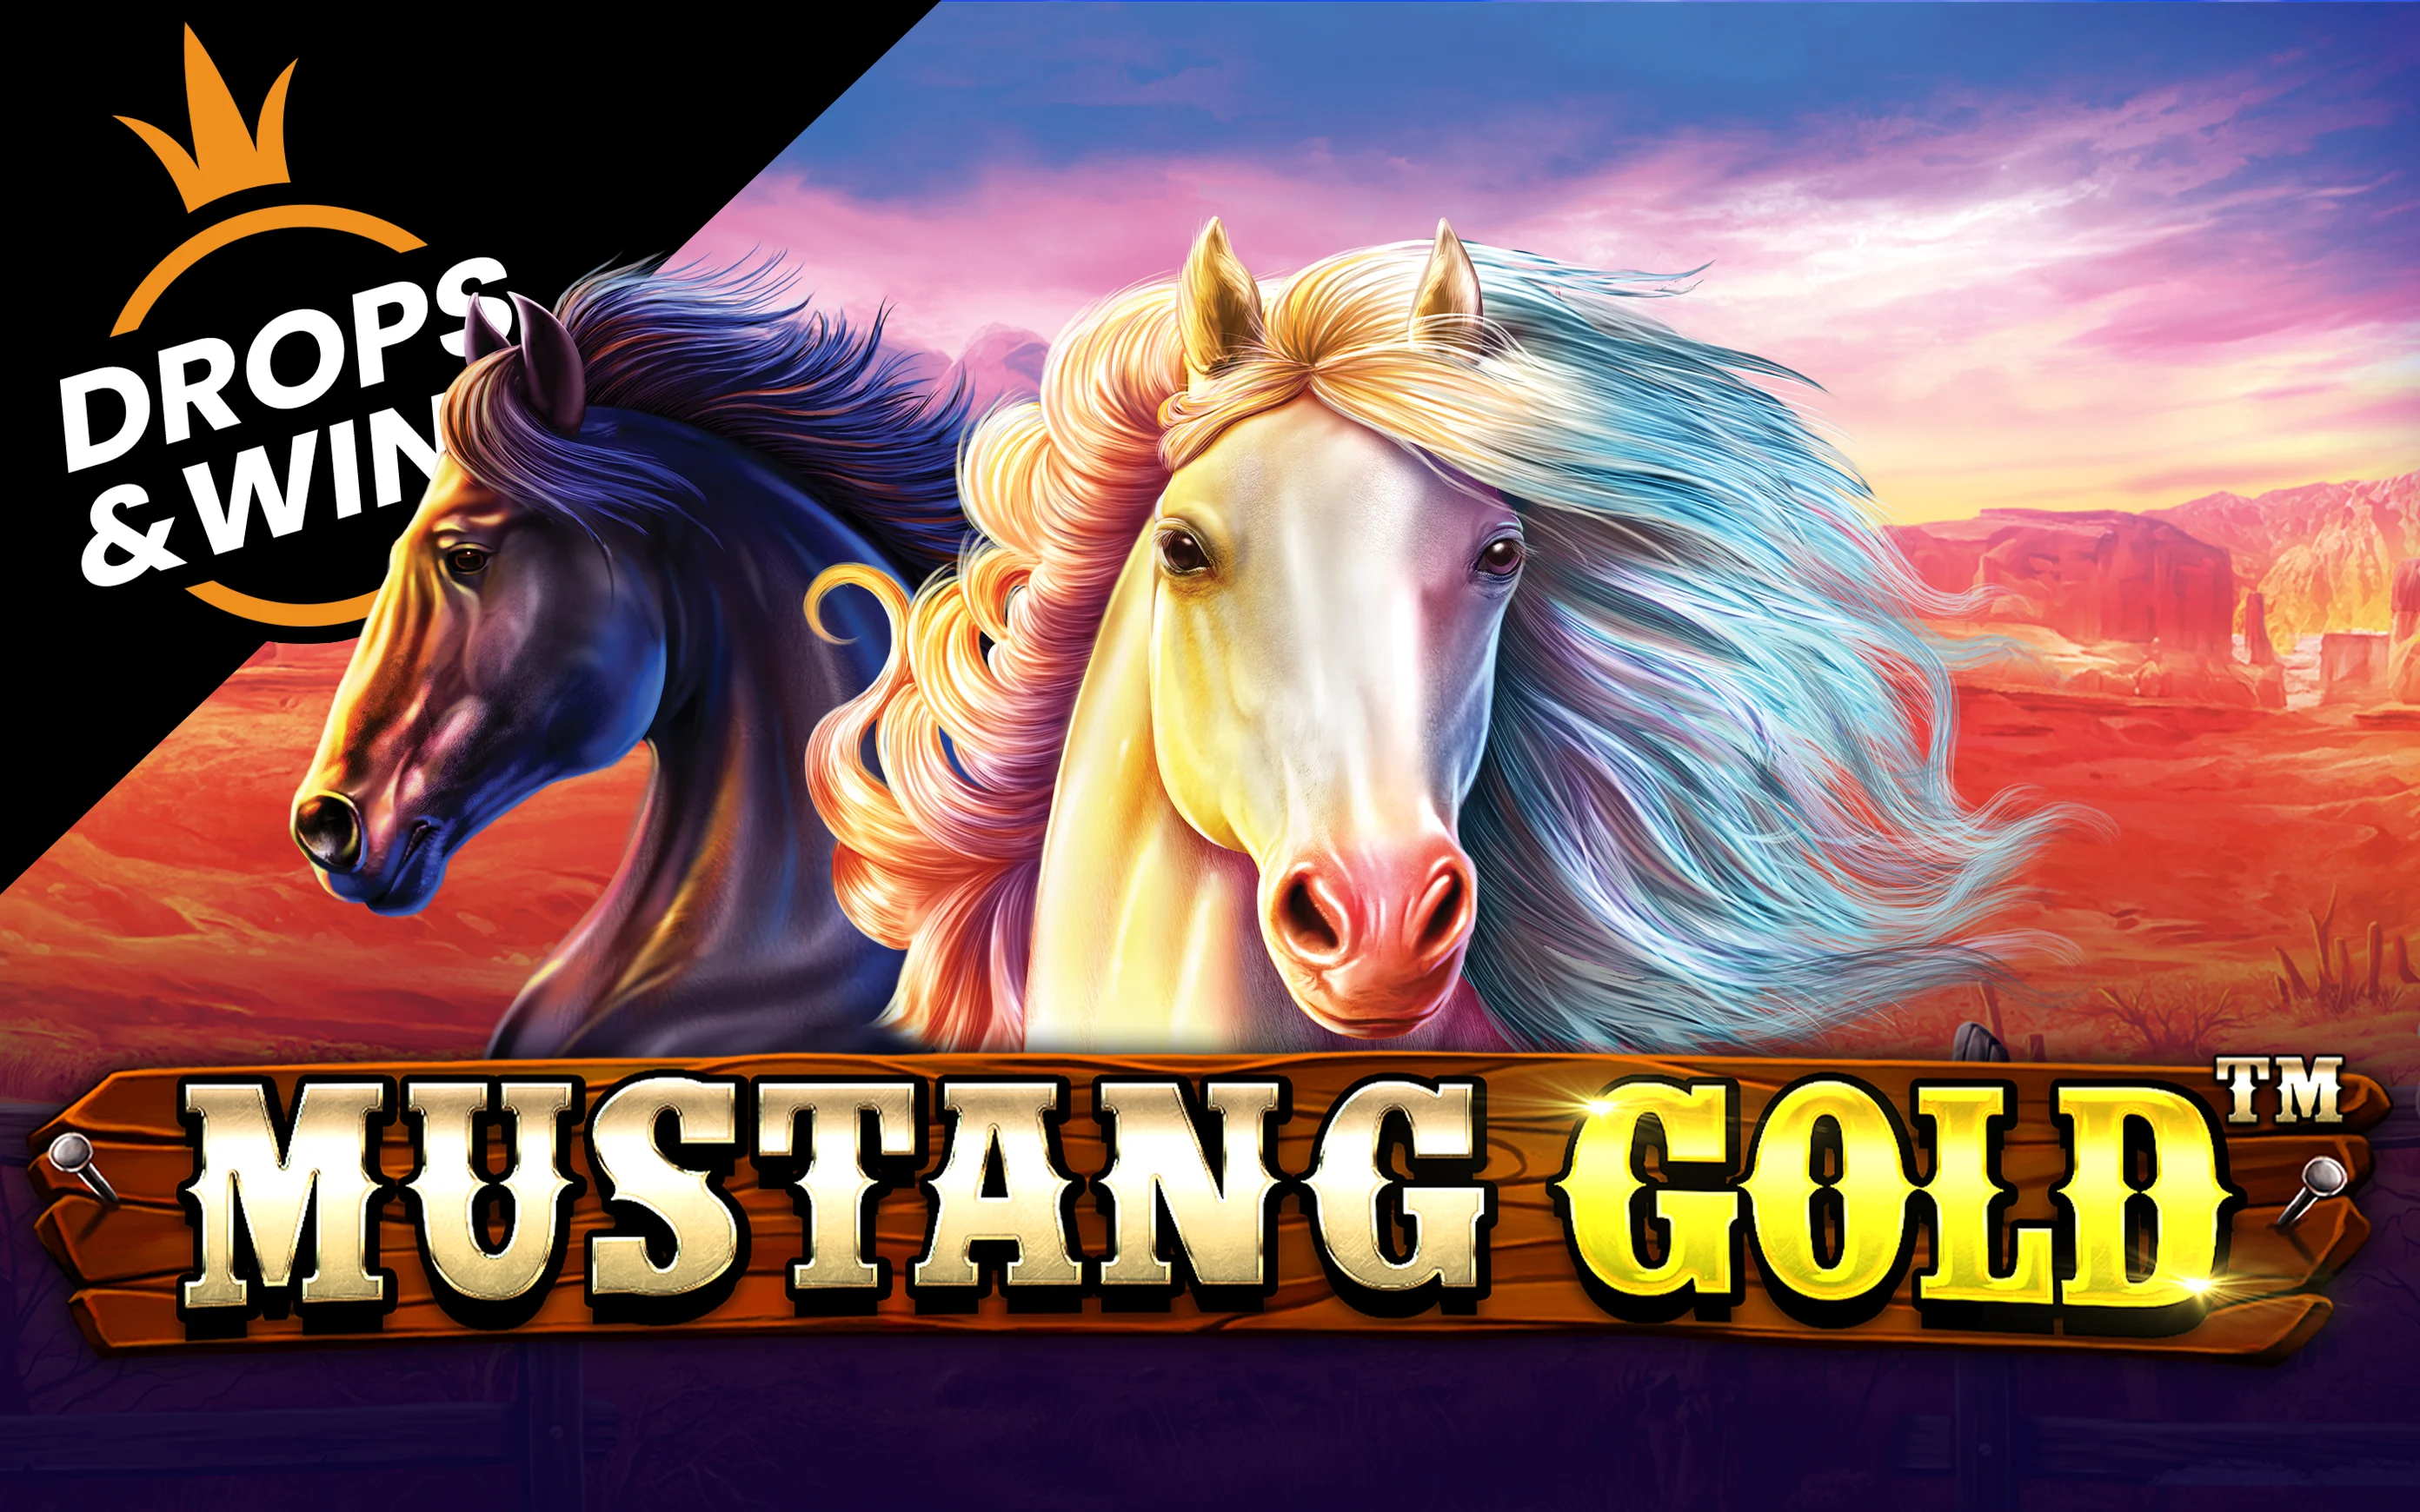 Gioca a Mustang Gold sul casino online Starcasino.be